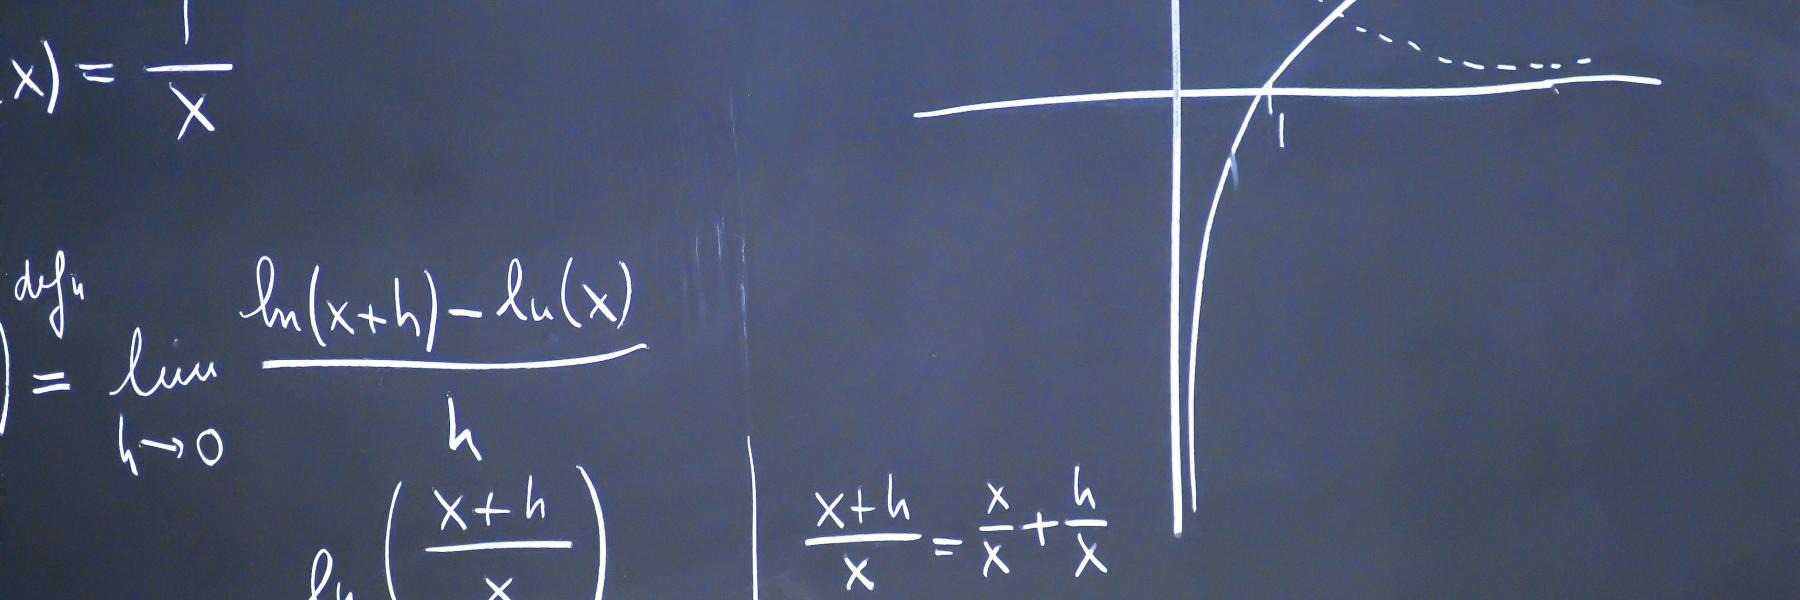 math formula on chalkboard